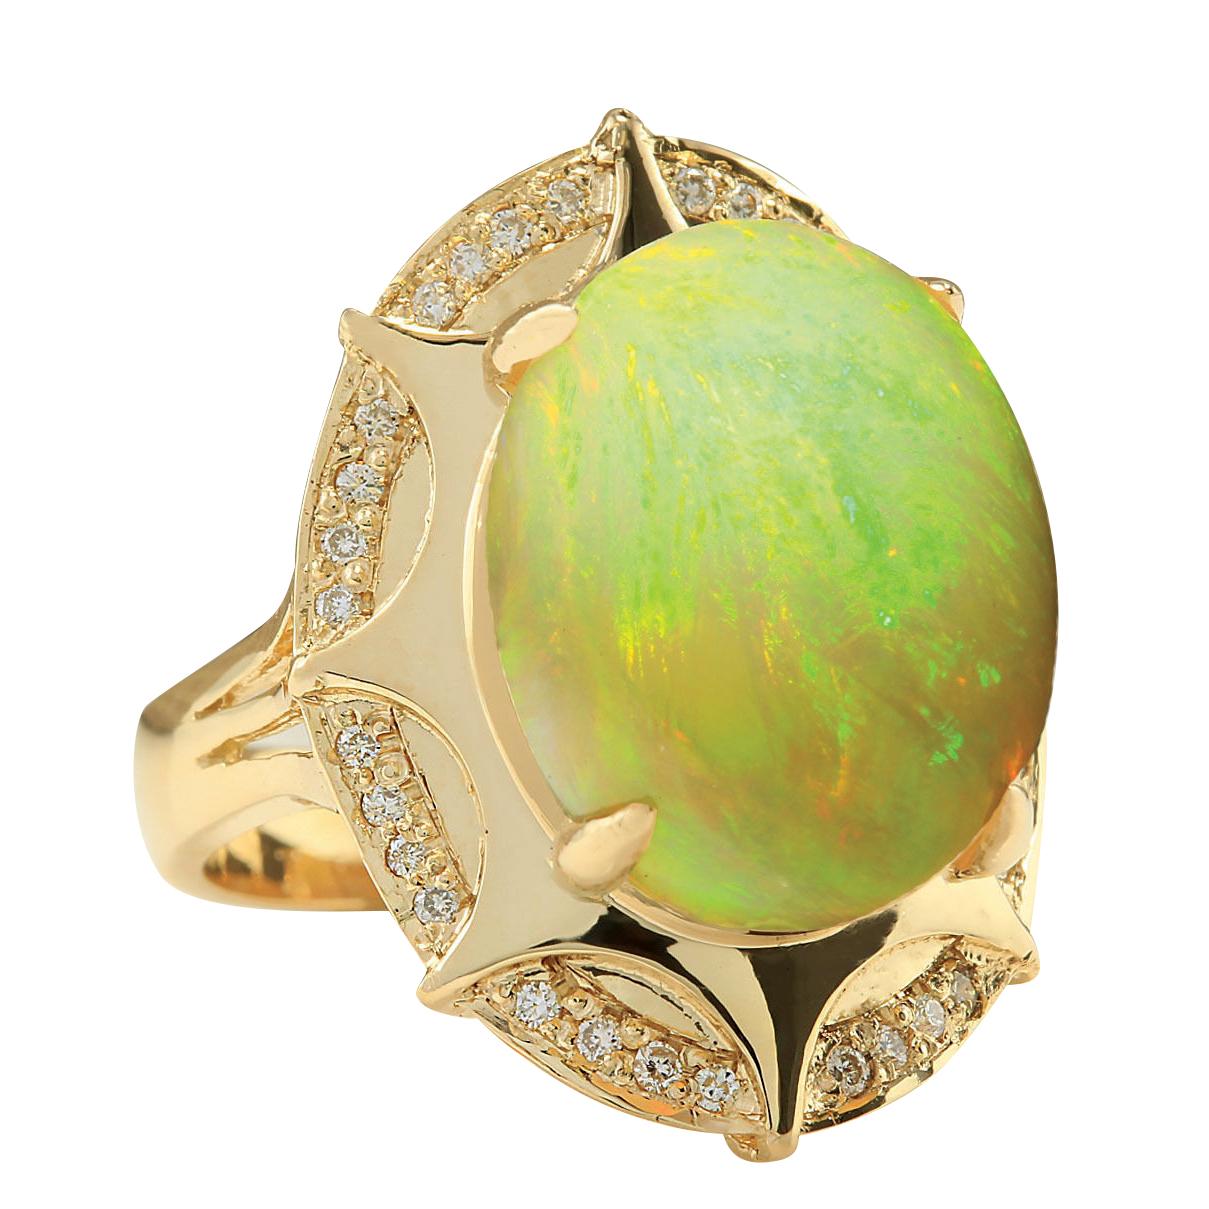 8.77 Carat Natural Opal 14 Karat Yellow Gold Diamond Ring
Stamped: 14K Yellow Gold
Total Ring Weight: 9.3 Grams
Total Natural Opal Weight is 8.52 Carat (Measures: 16.00x12.00 mm)
Color: Multicolor
Total Natural Diamond Weight is 0.25 Carat
Color: